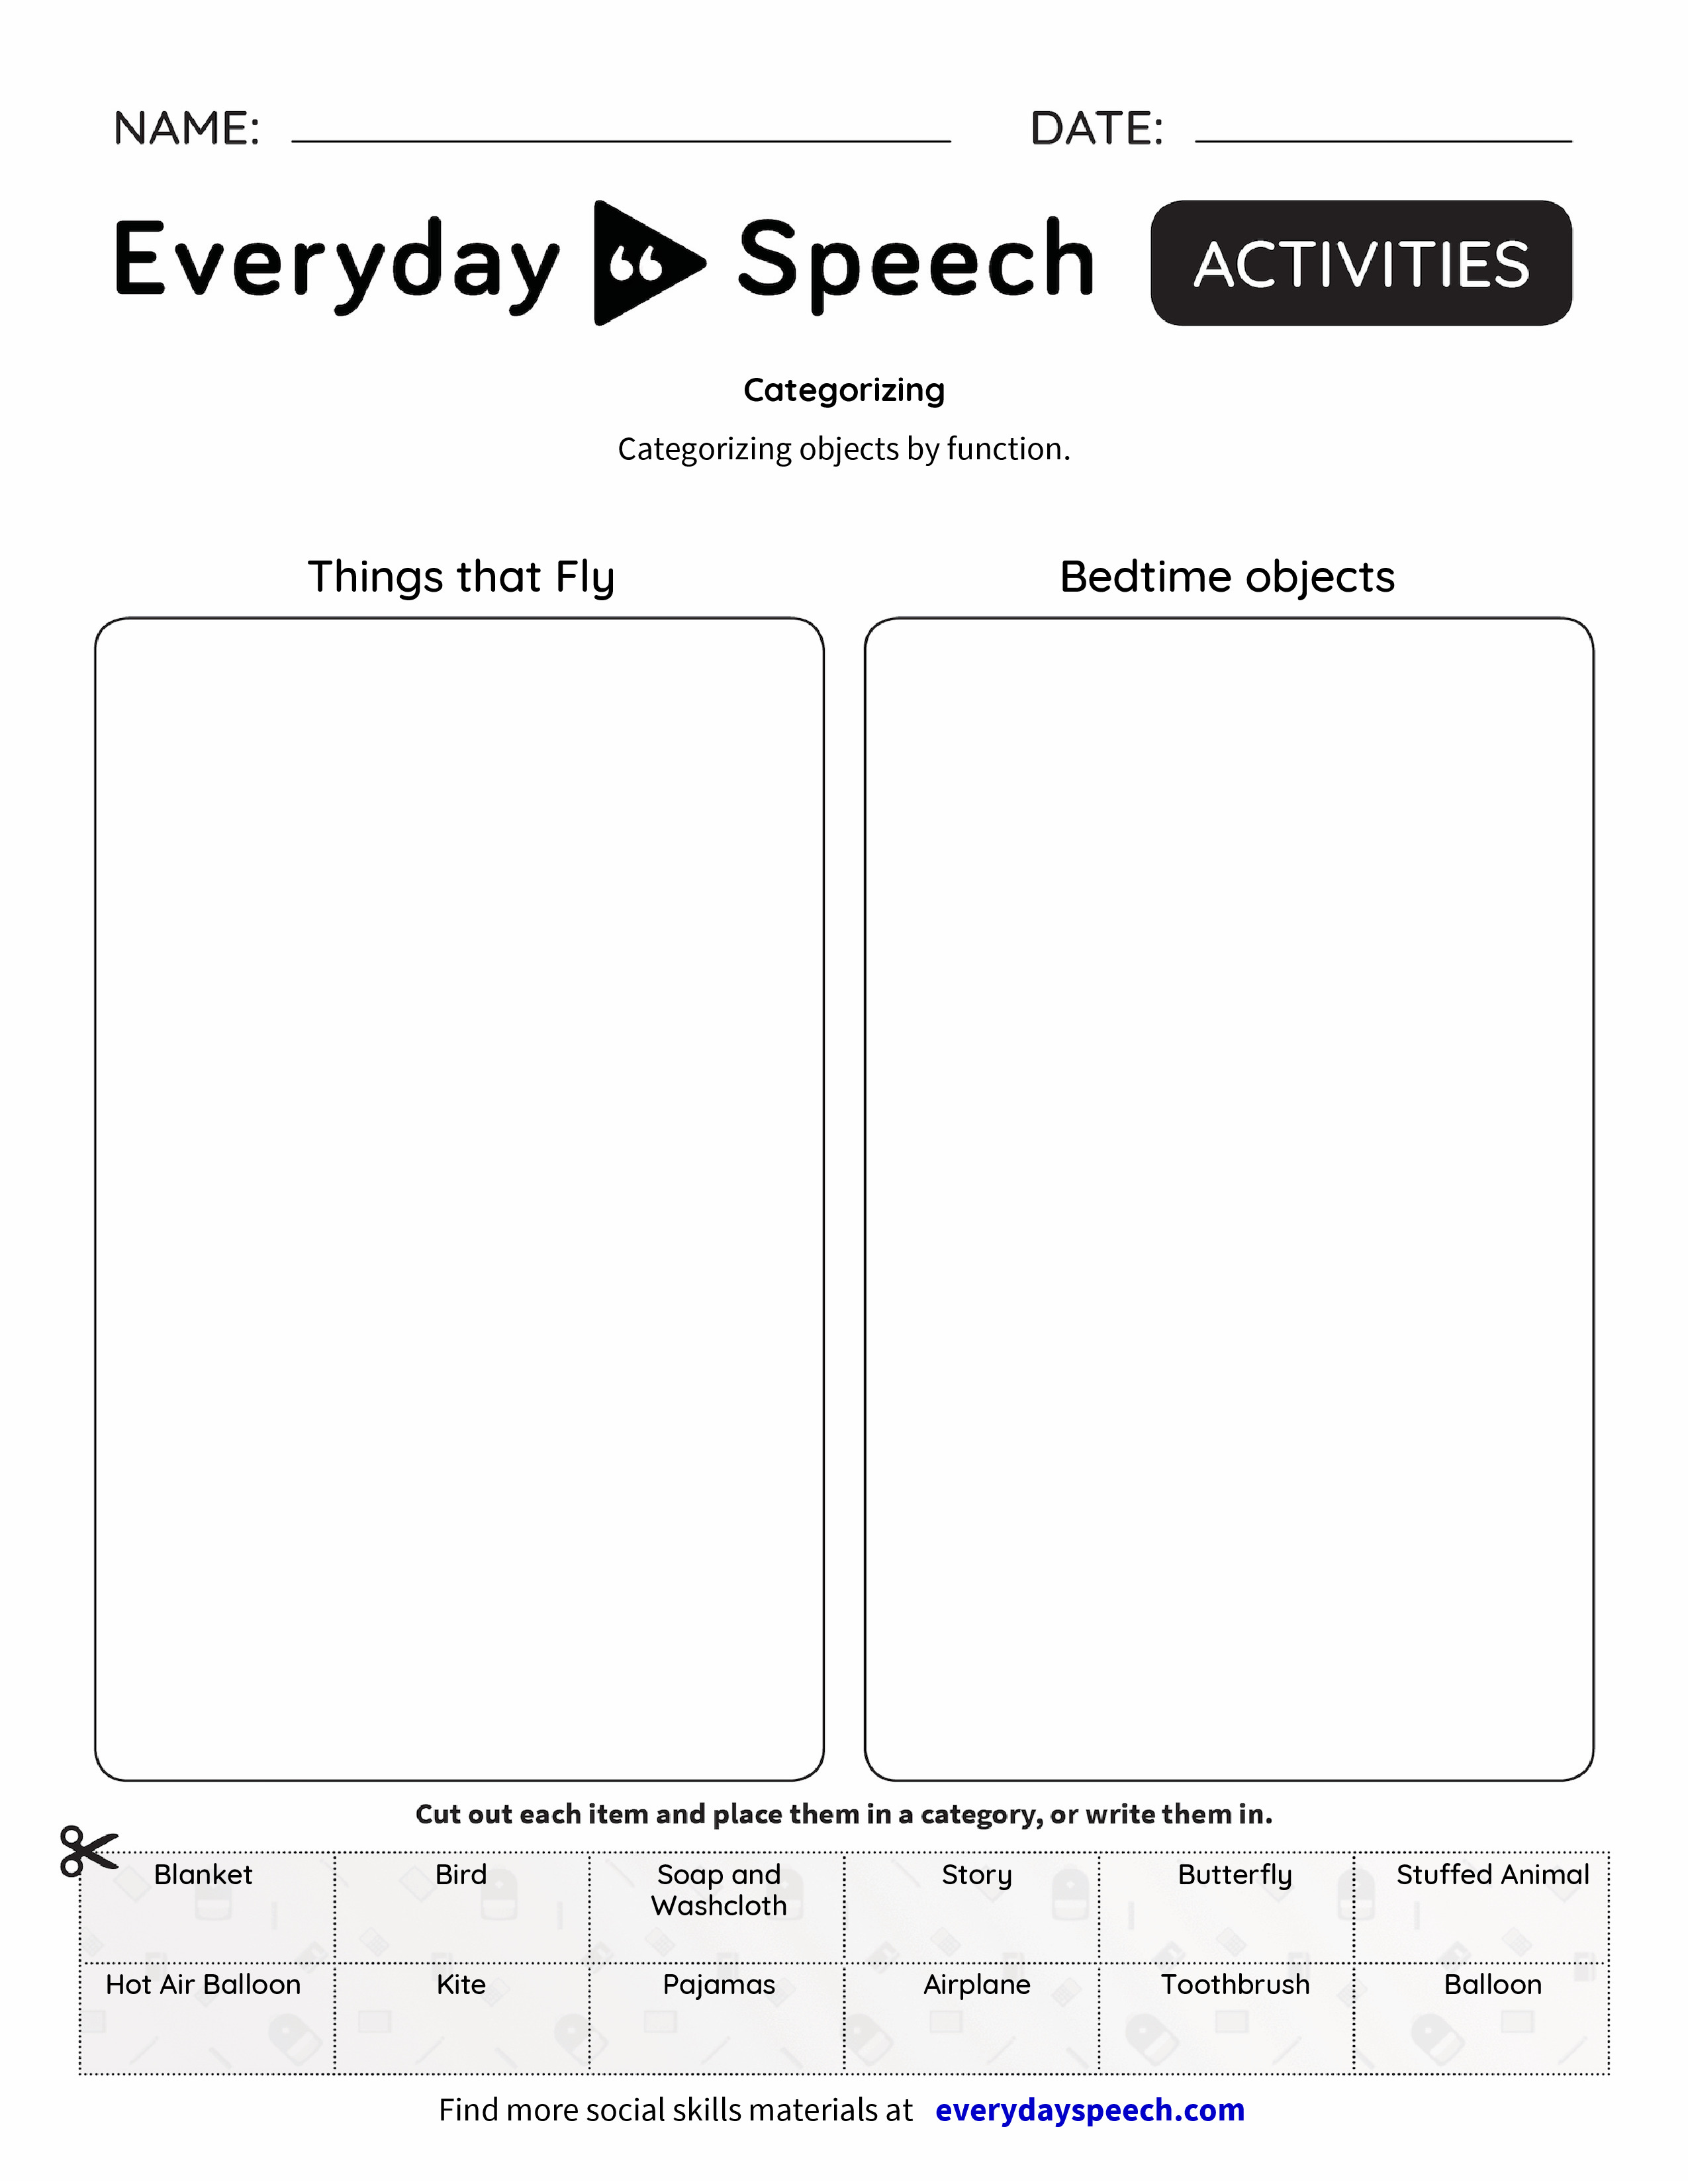 Categorizing Everyday Speech Everyday Speech